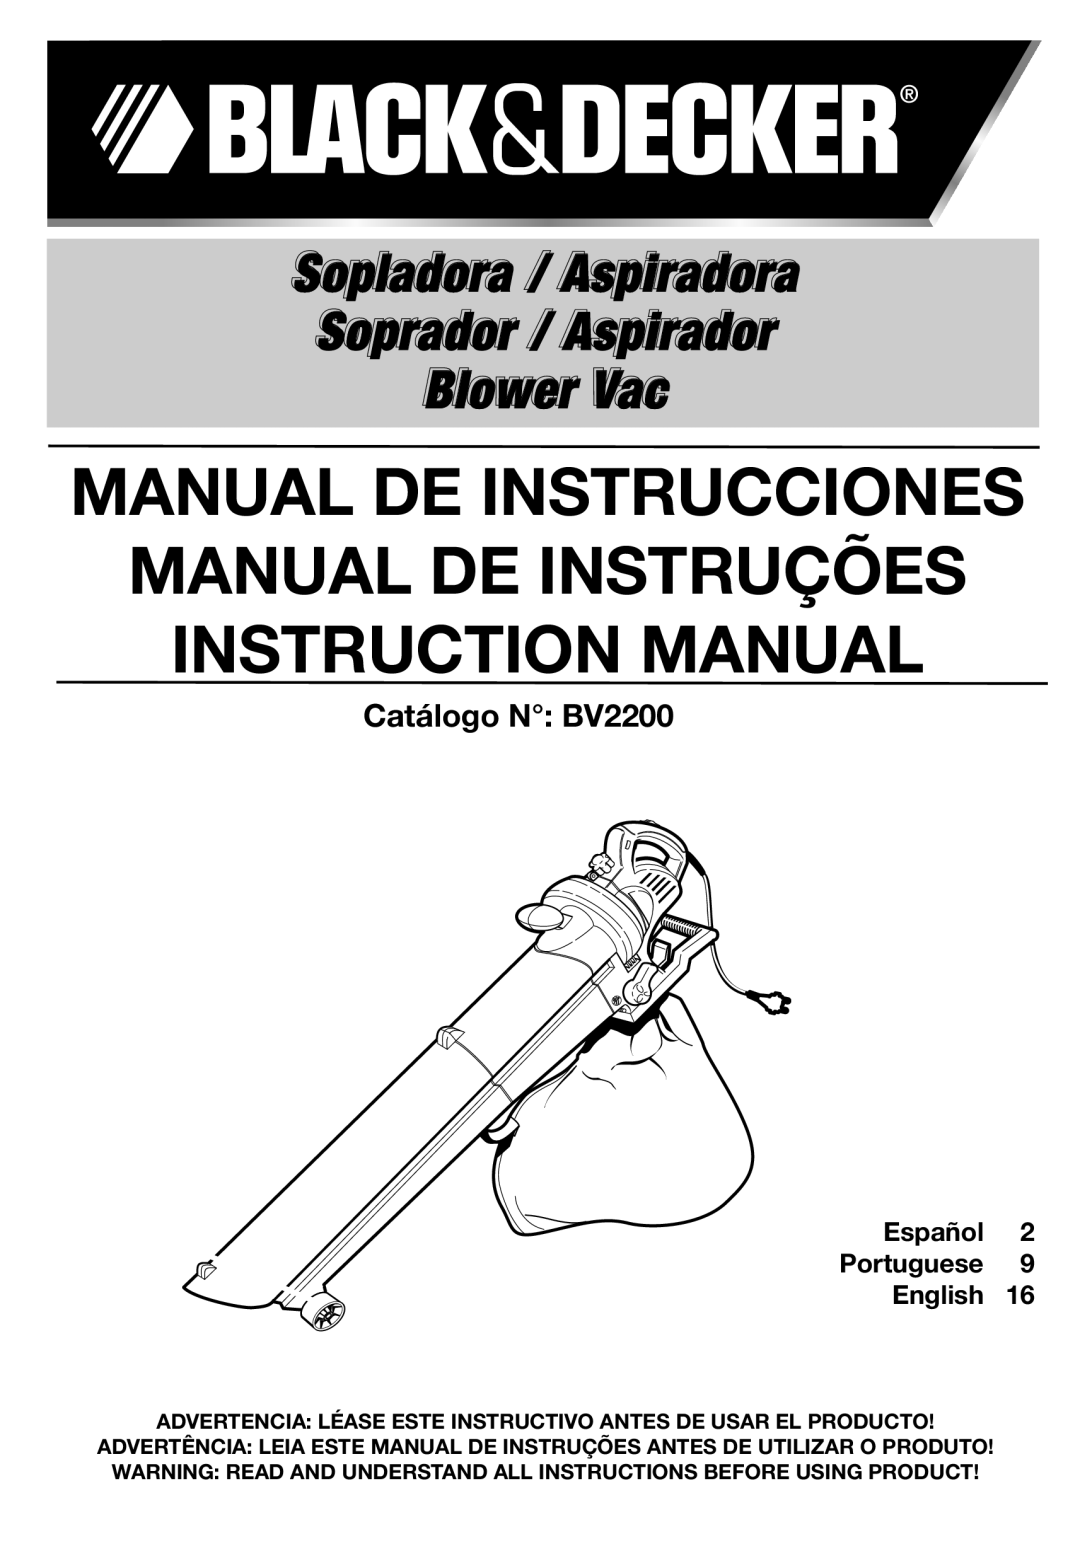 Black & Decker BV2200 instruction manual Español Portuguese English, Manual De Instrucciones Manual De Instruções 